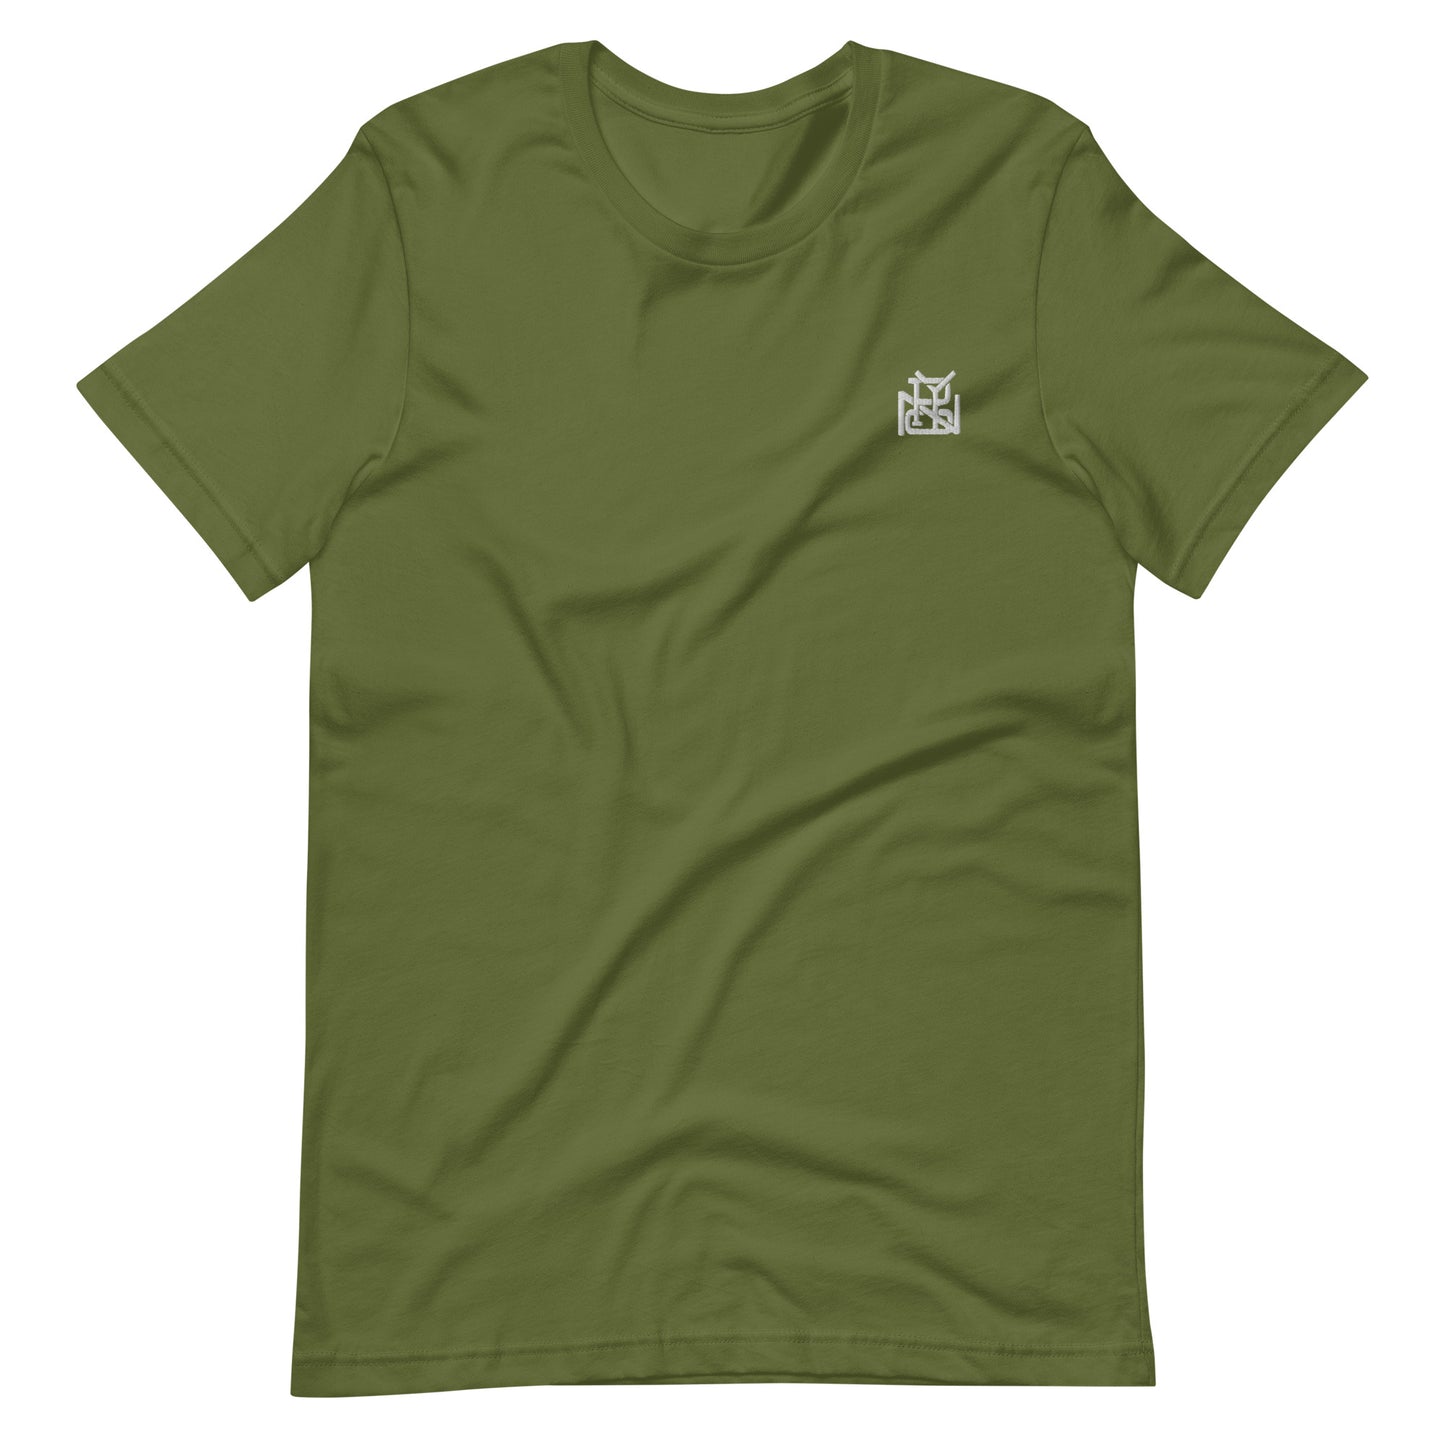 PoNY Monogram T-shirt [VARIOUS COLORS]